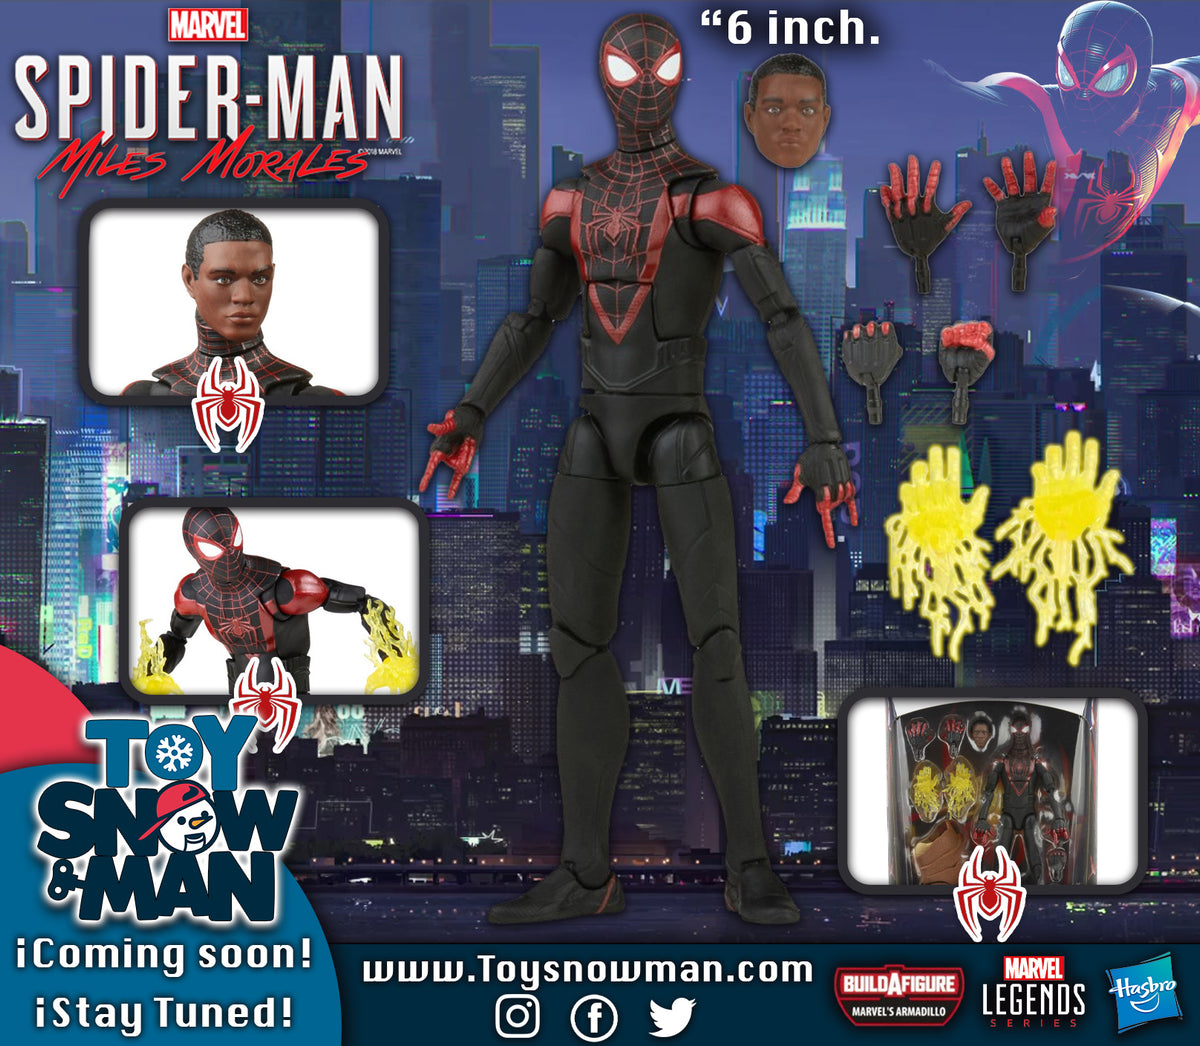  Hasbro Marvel Legends Gamerverse Spider-Man 6 Inch Action Figure  : Toys & Games